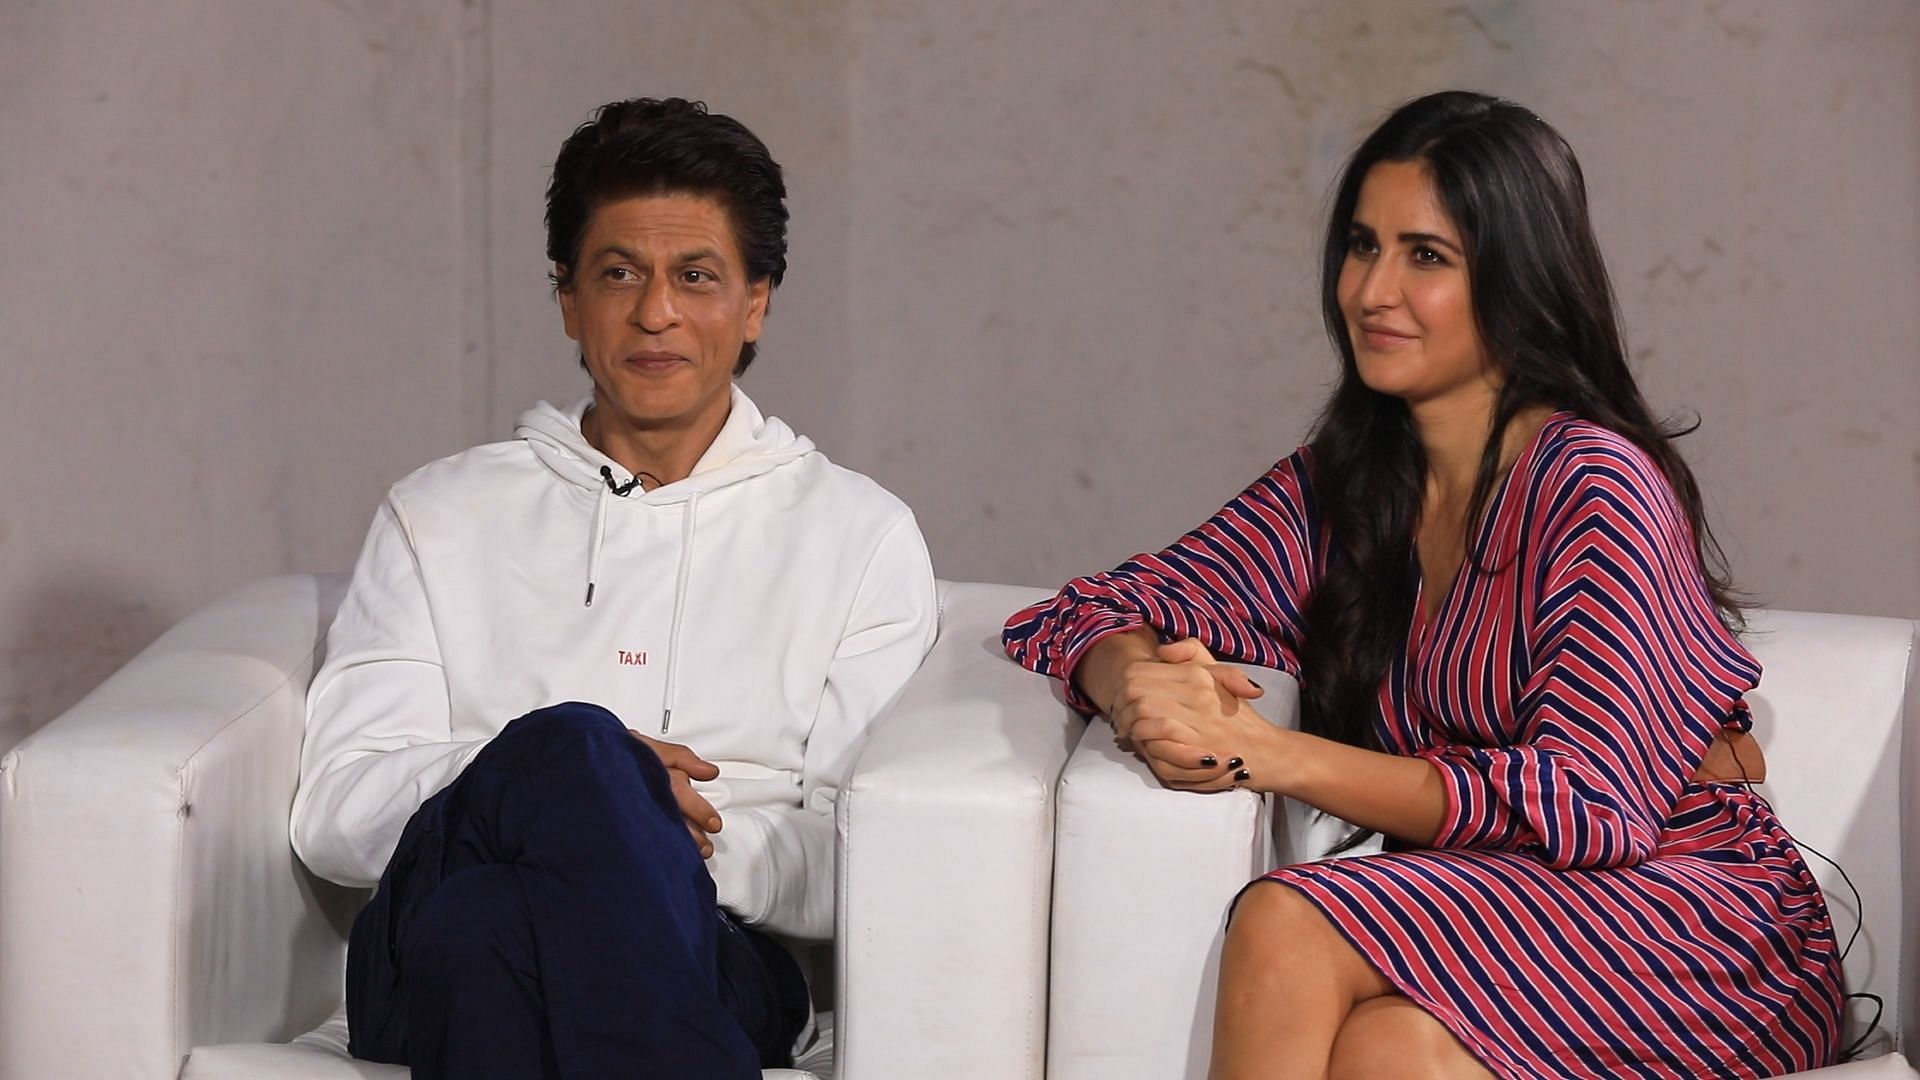 Shah Rukh Khan and Katrina Kaif get candid while promoting <i>Zero</i>.